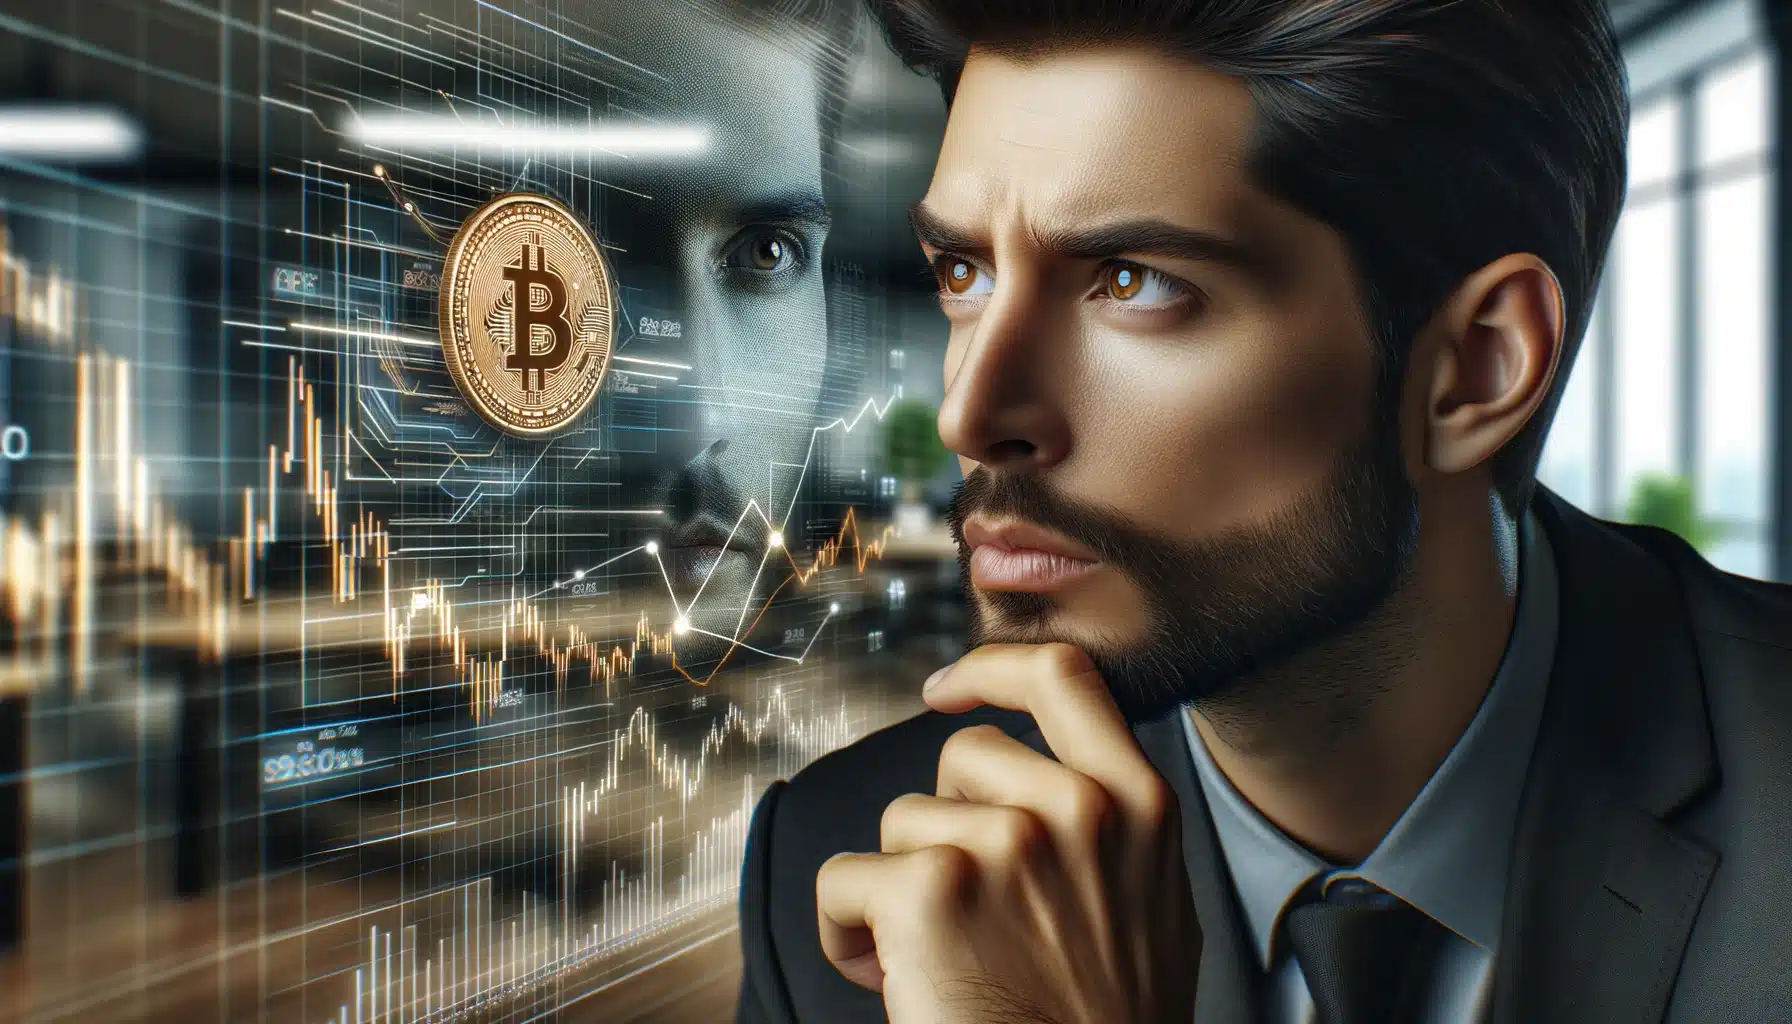 Bitcoin investor